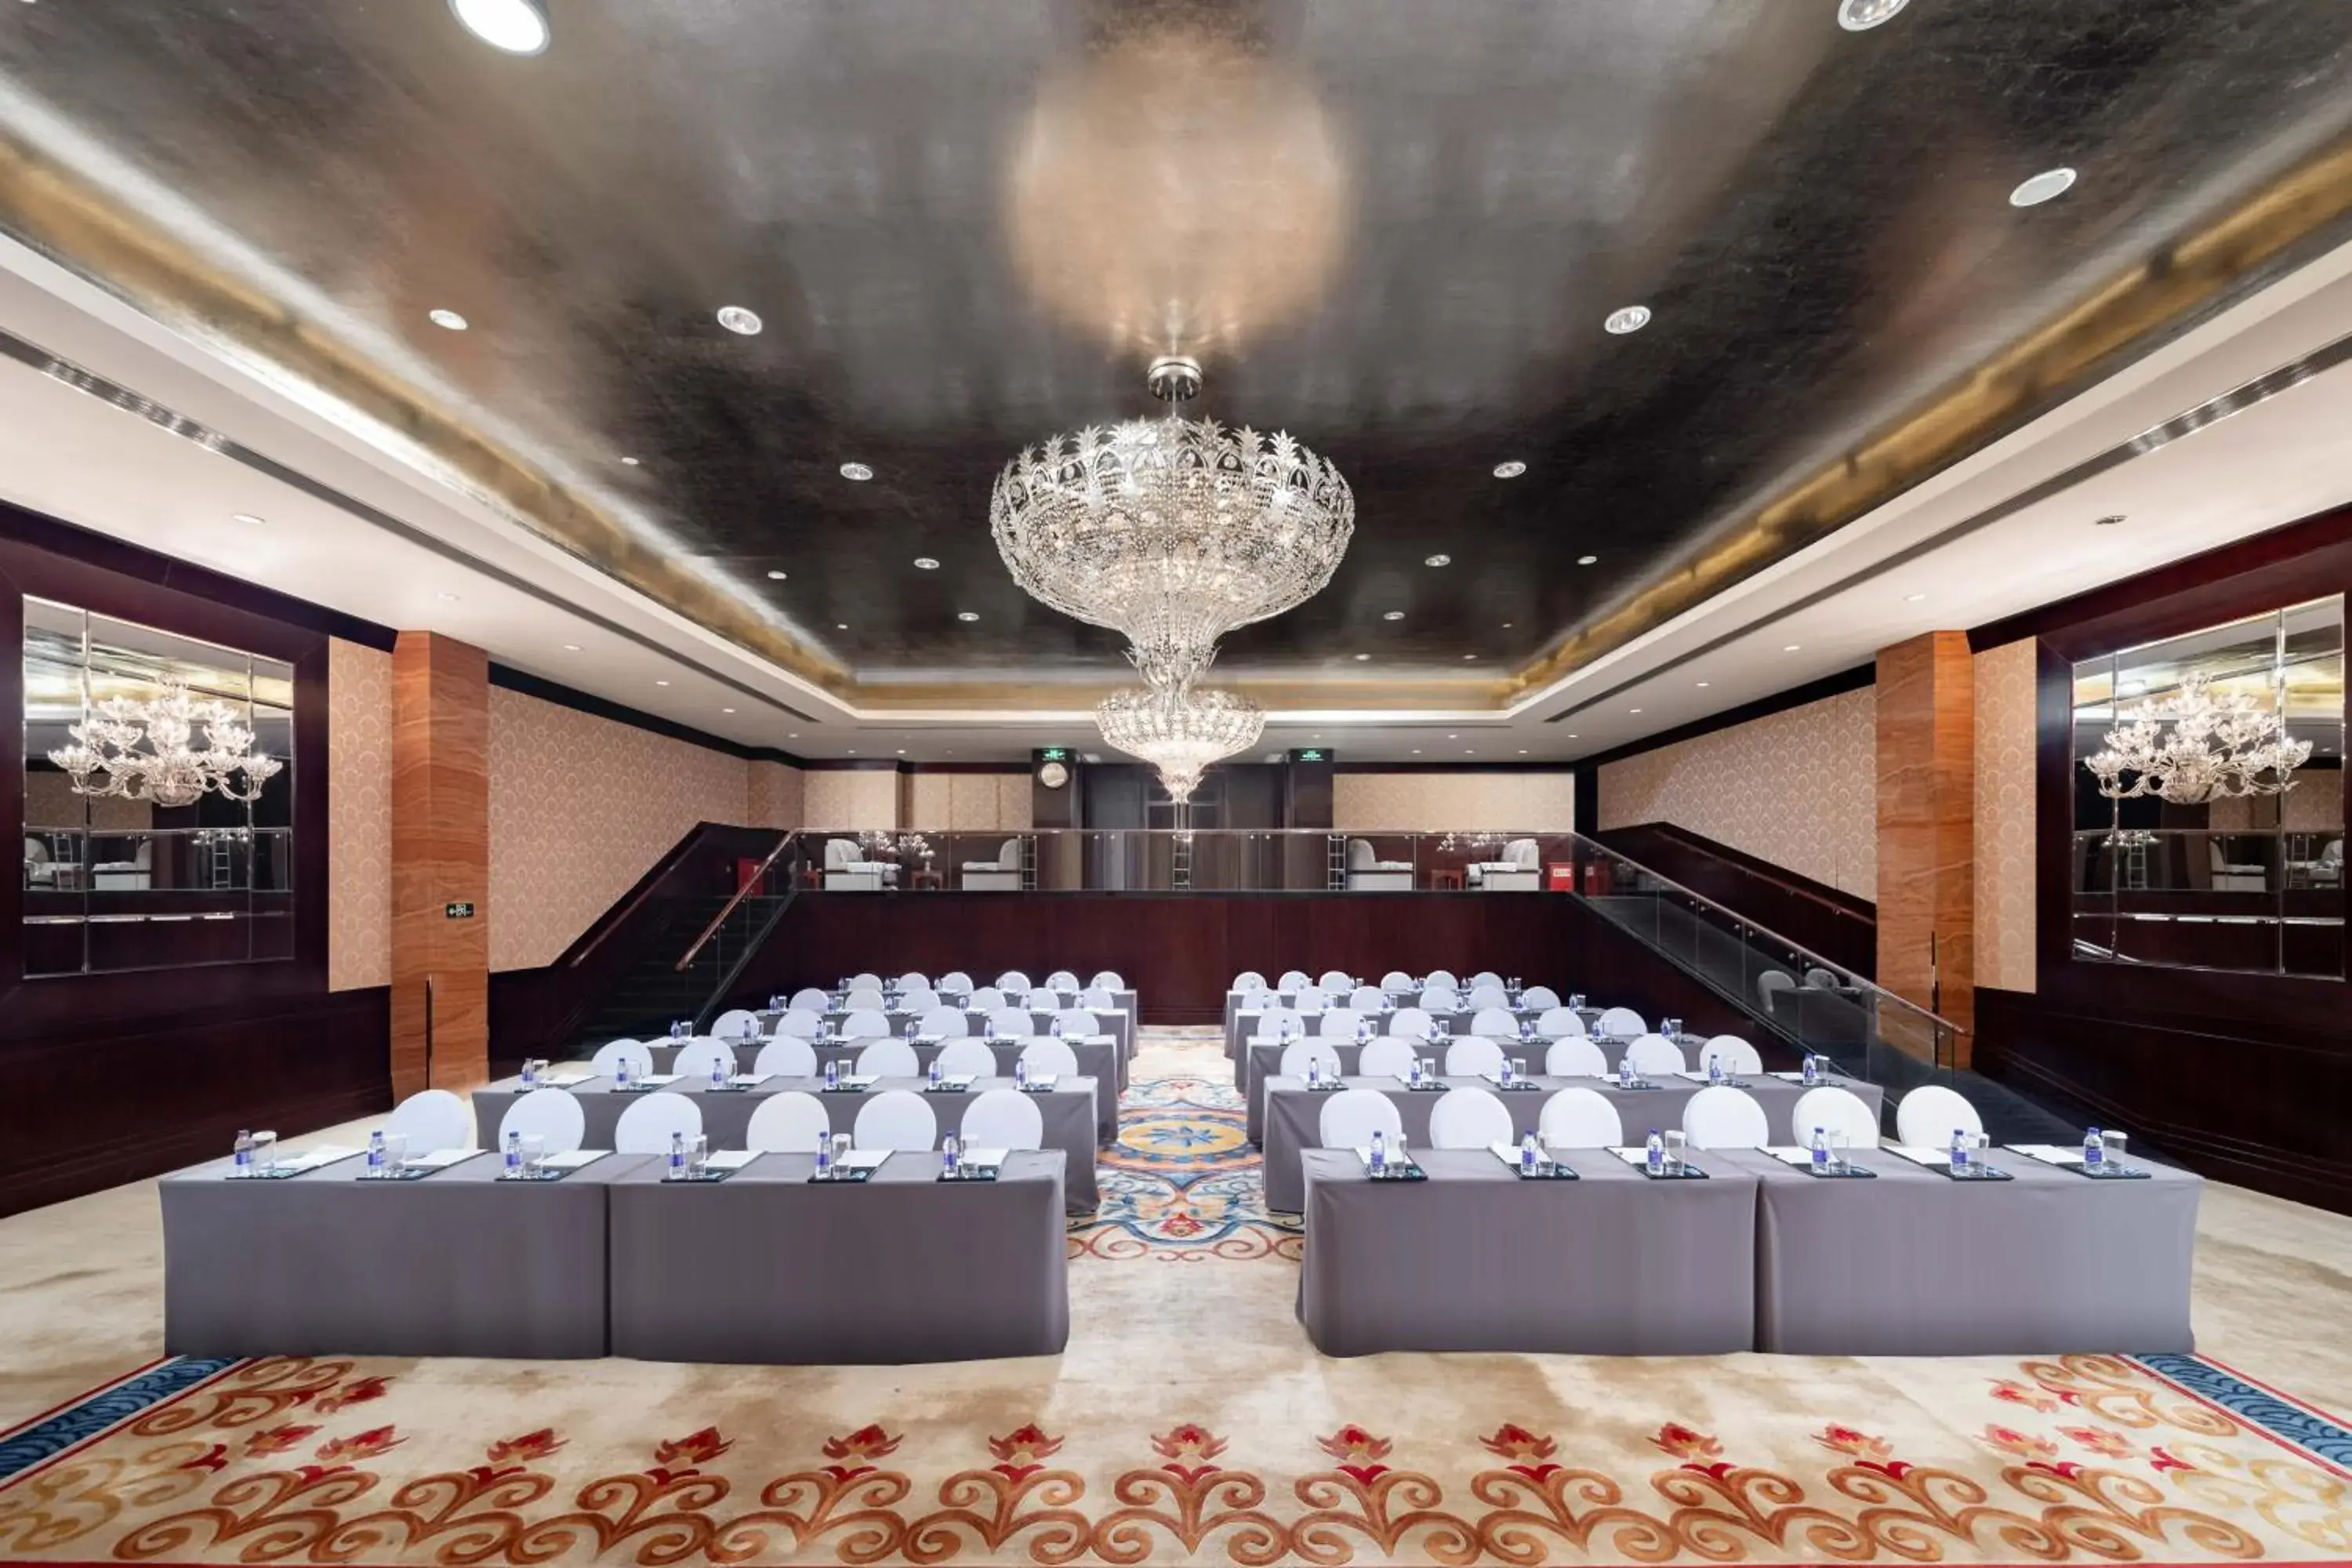 Banquet/Function facilities, Banquet Facilities in Shangri-La Hotel Xi'an